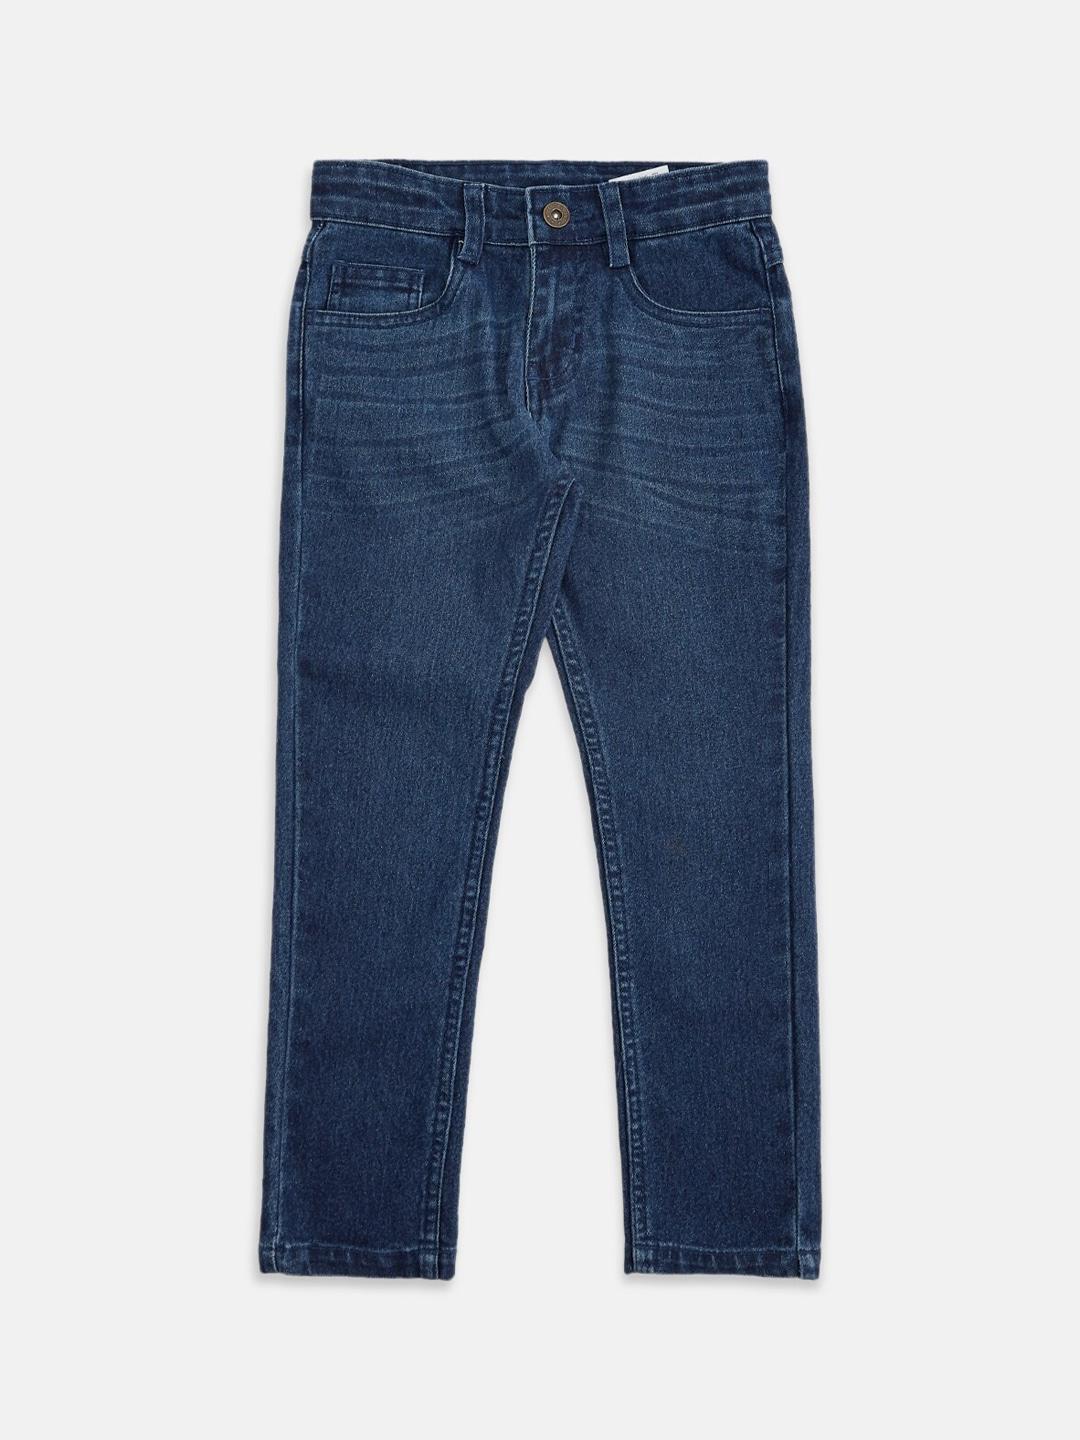 pantaloons-junior-boys-blue-light-fade-jeans